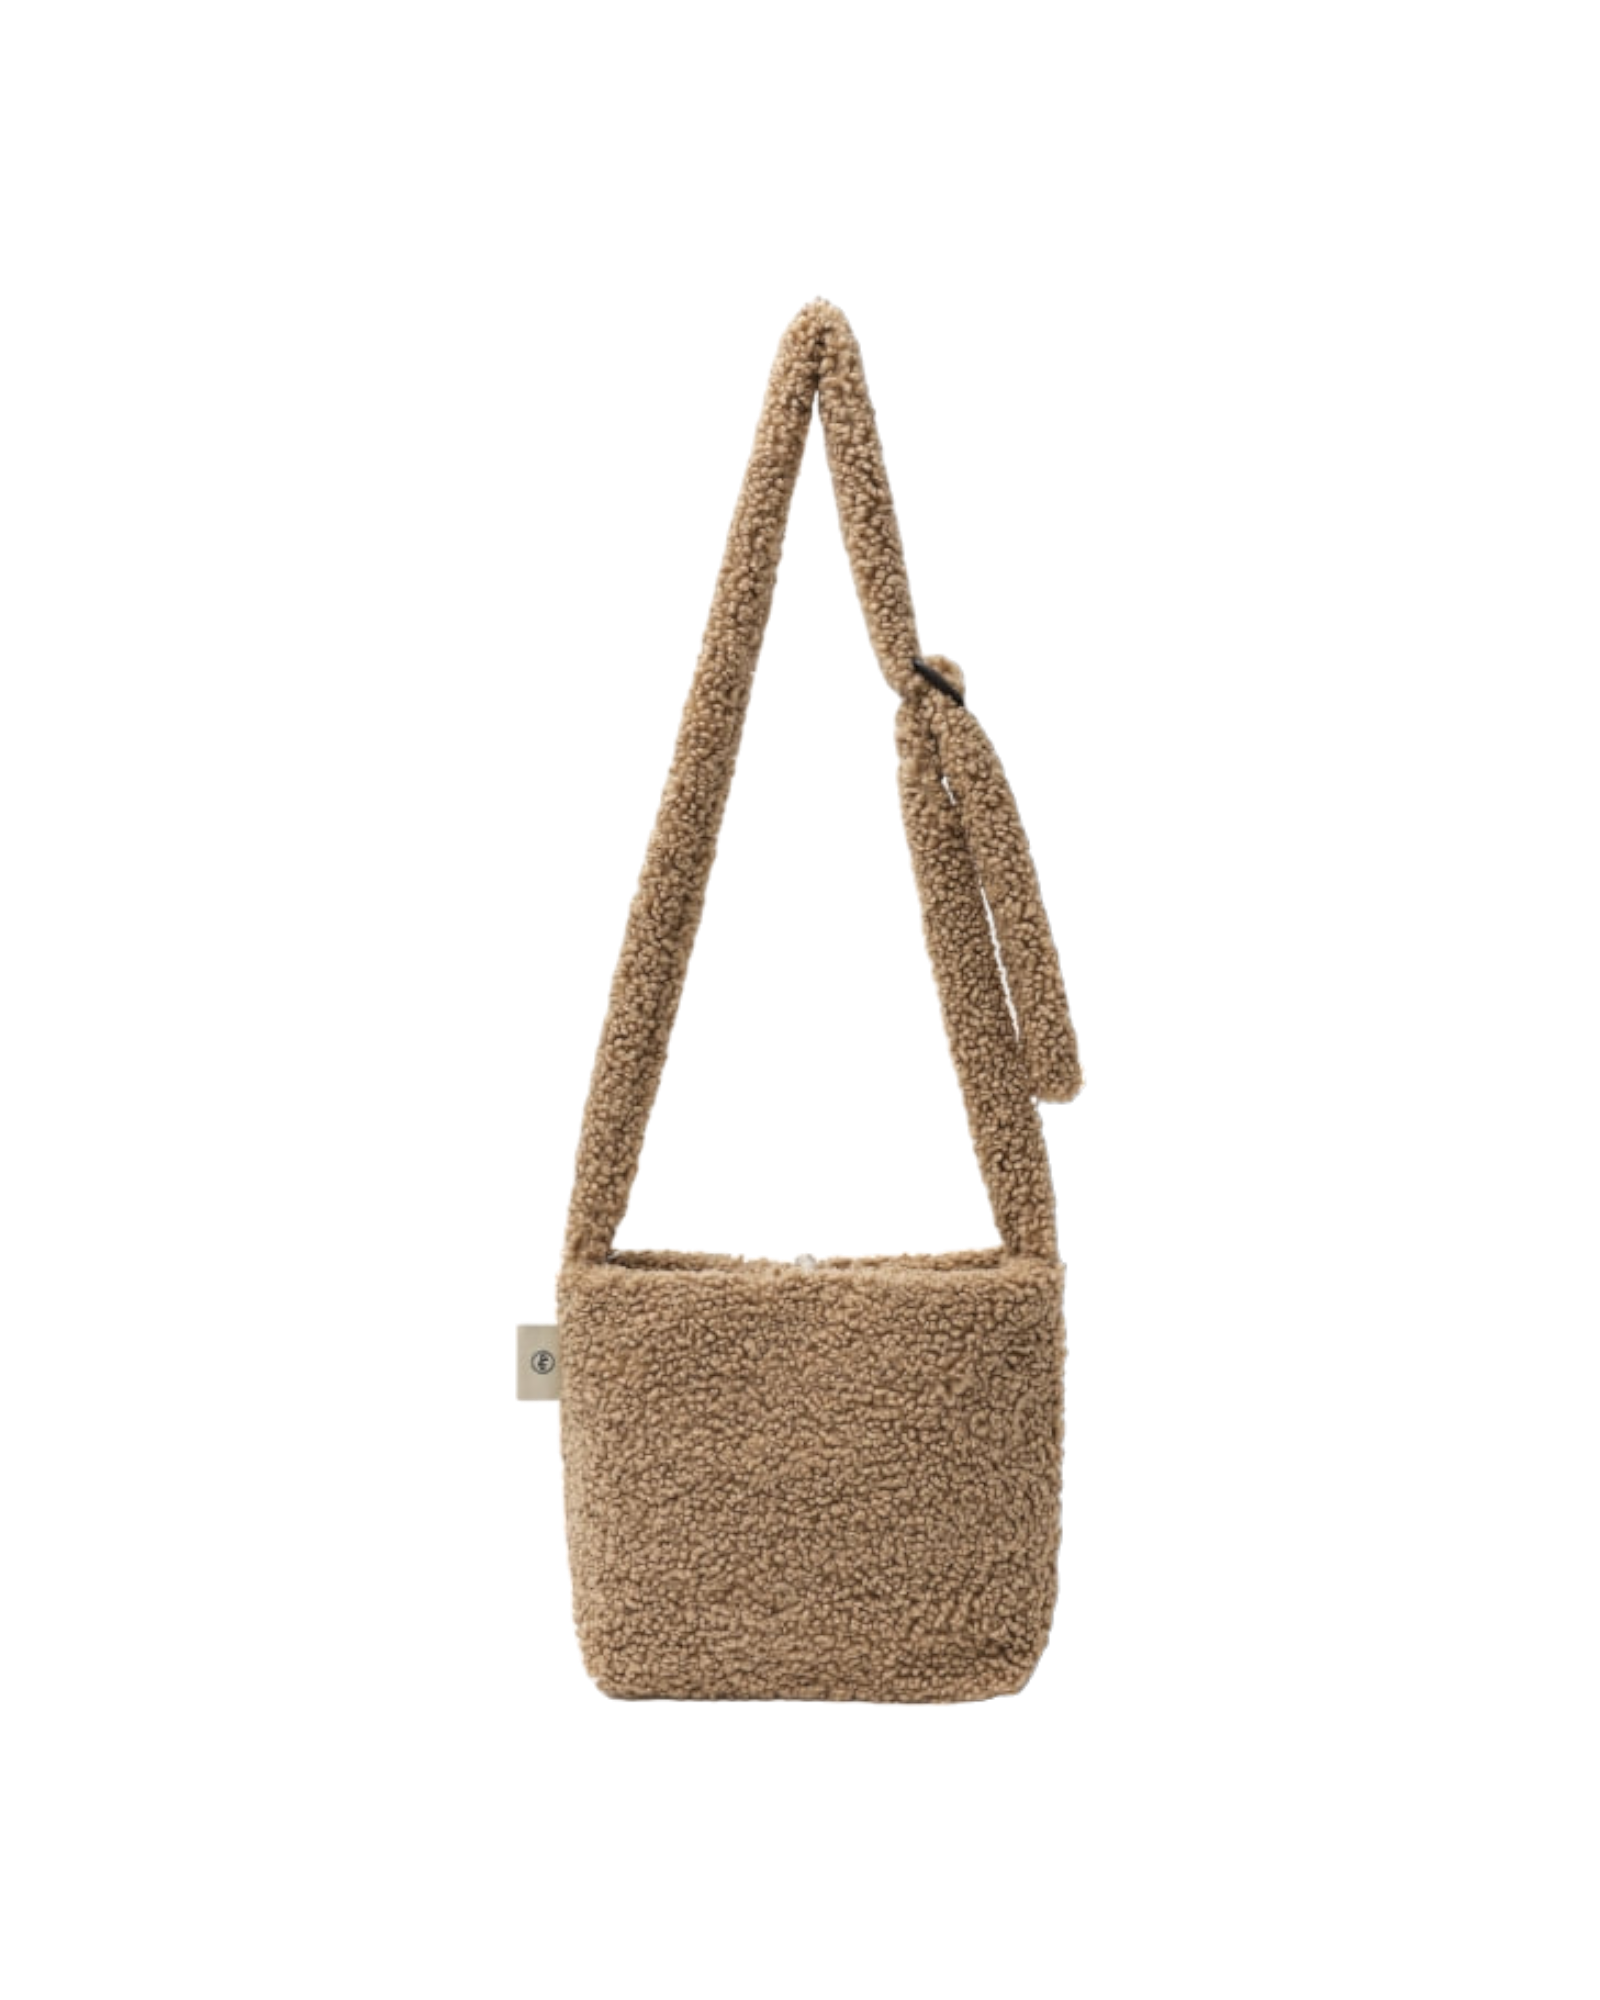 Poodle Bag (cross-body) In Brown